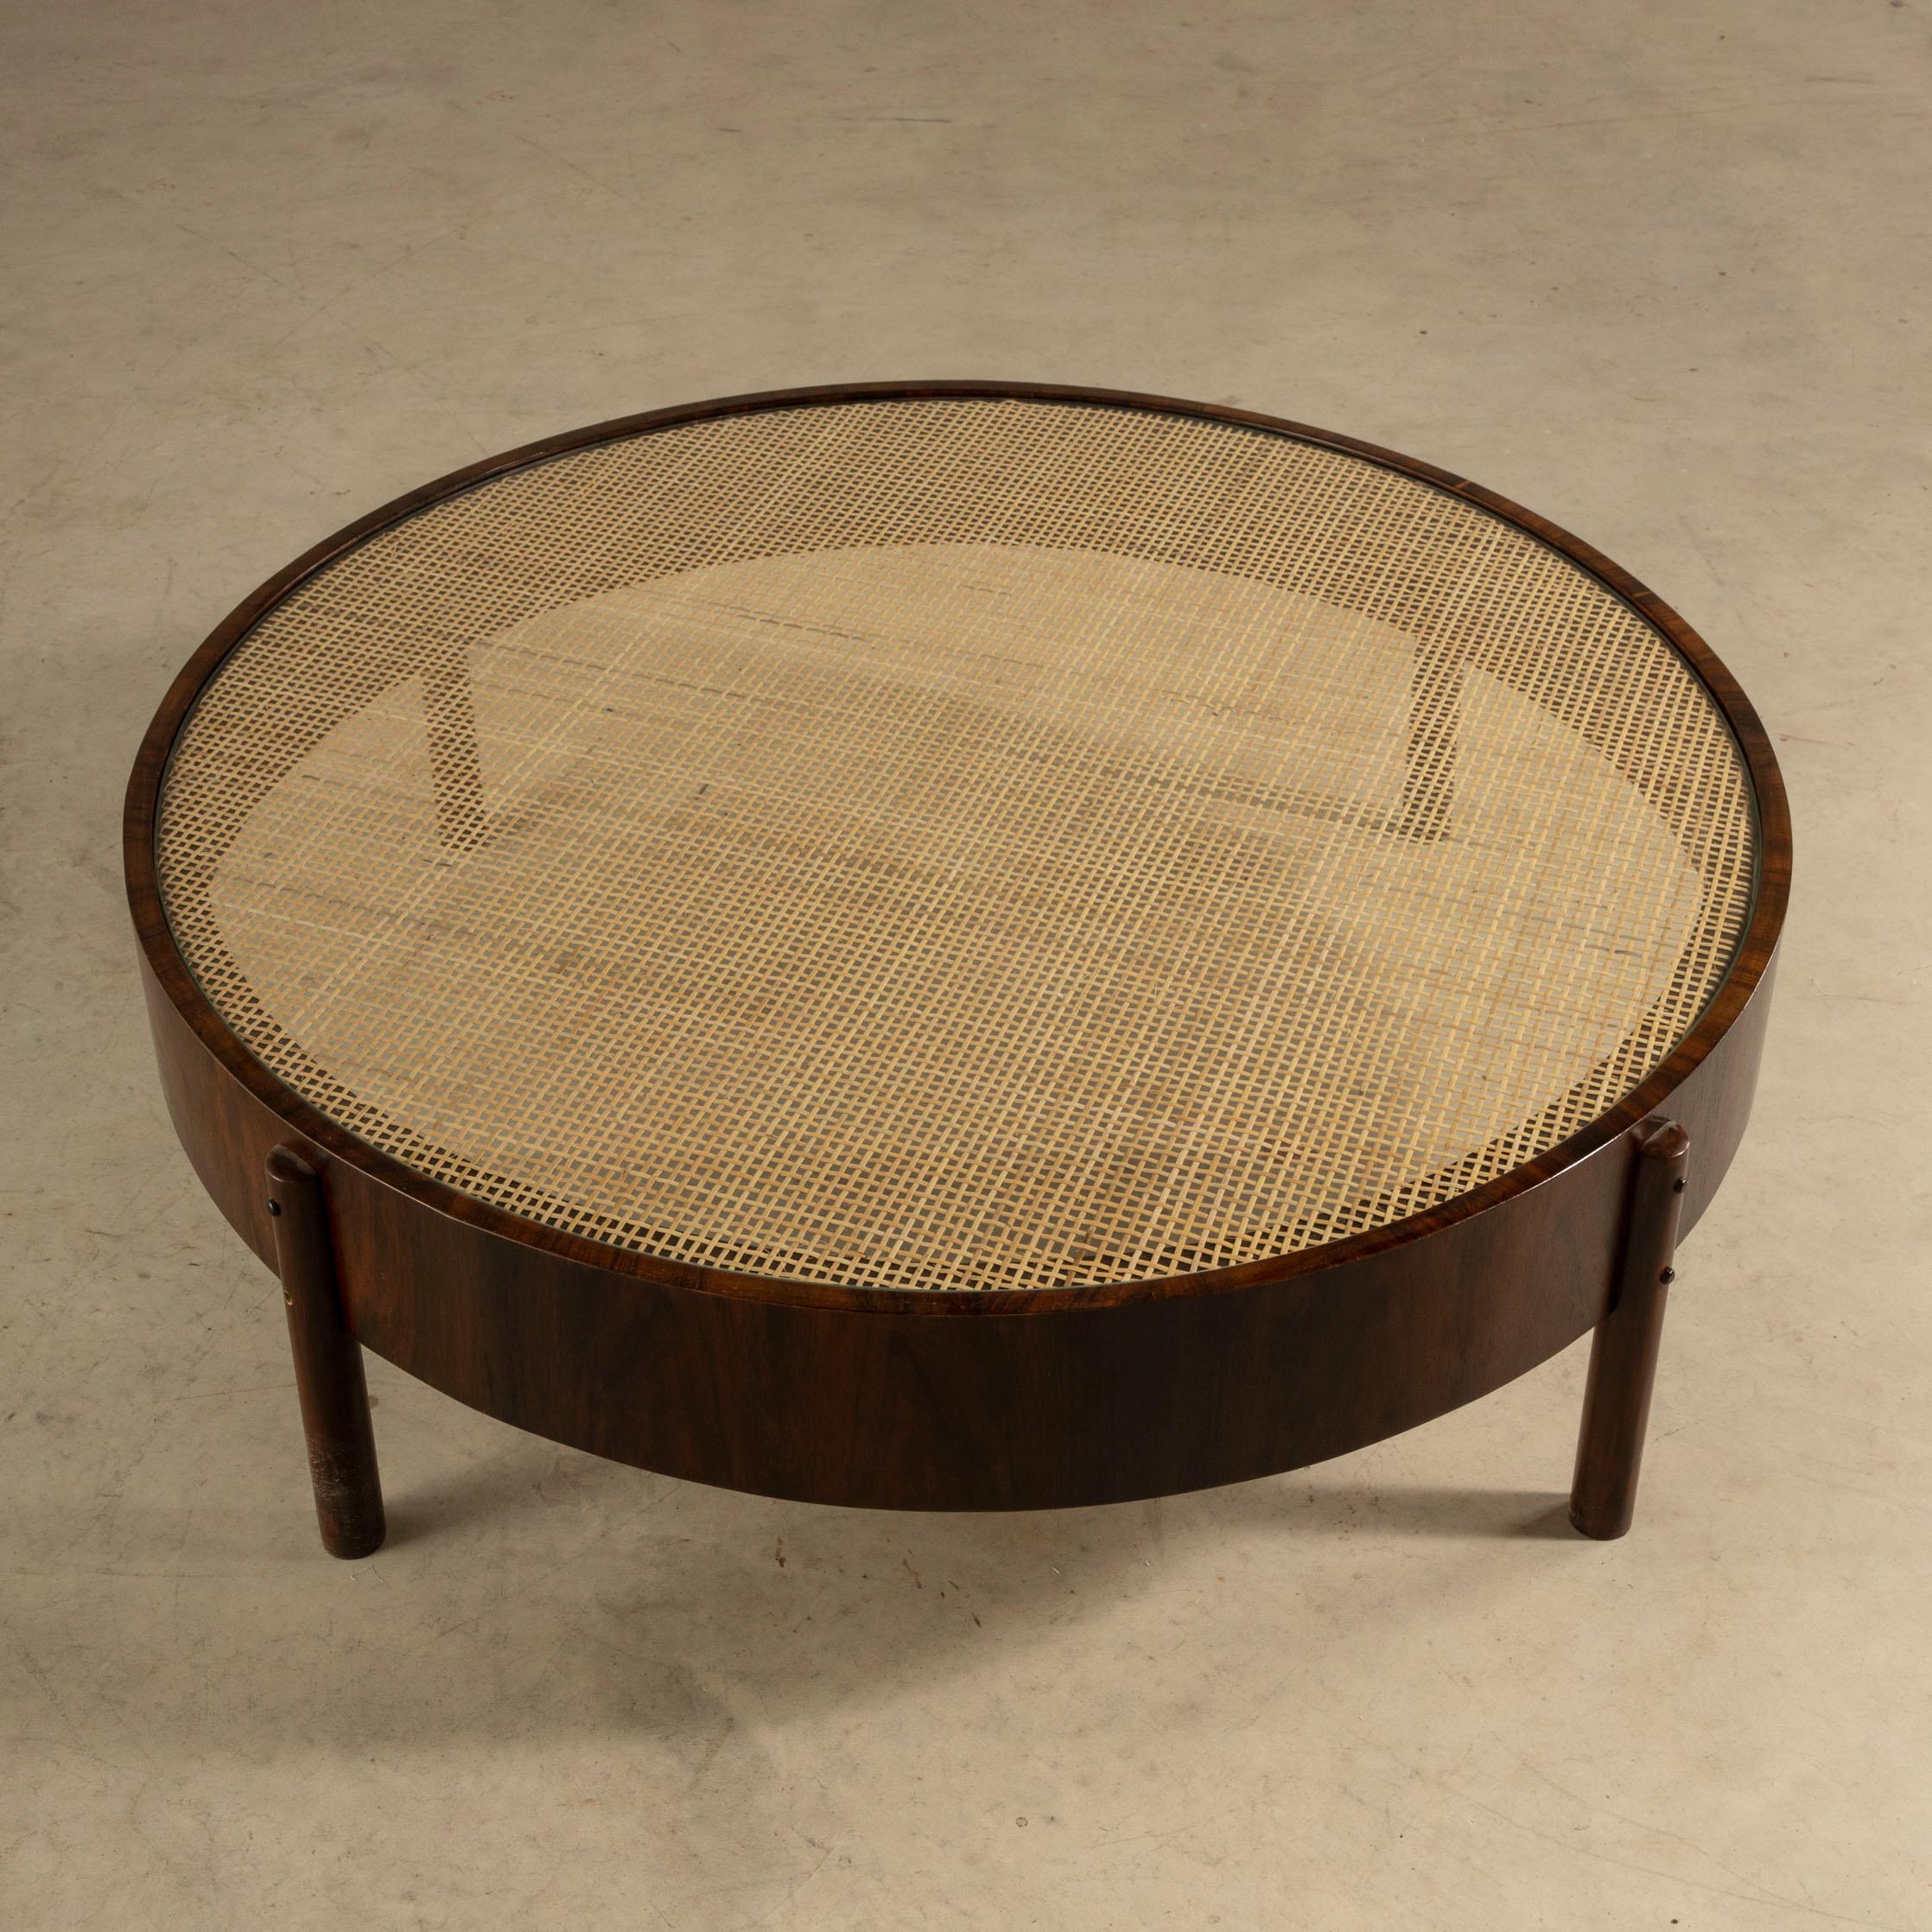 Mid-Century Modern Round Adi Coffee Table, 2019, 60's-Inspired Brazilian Design